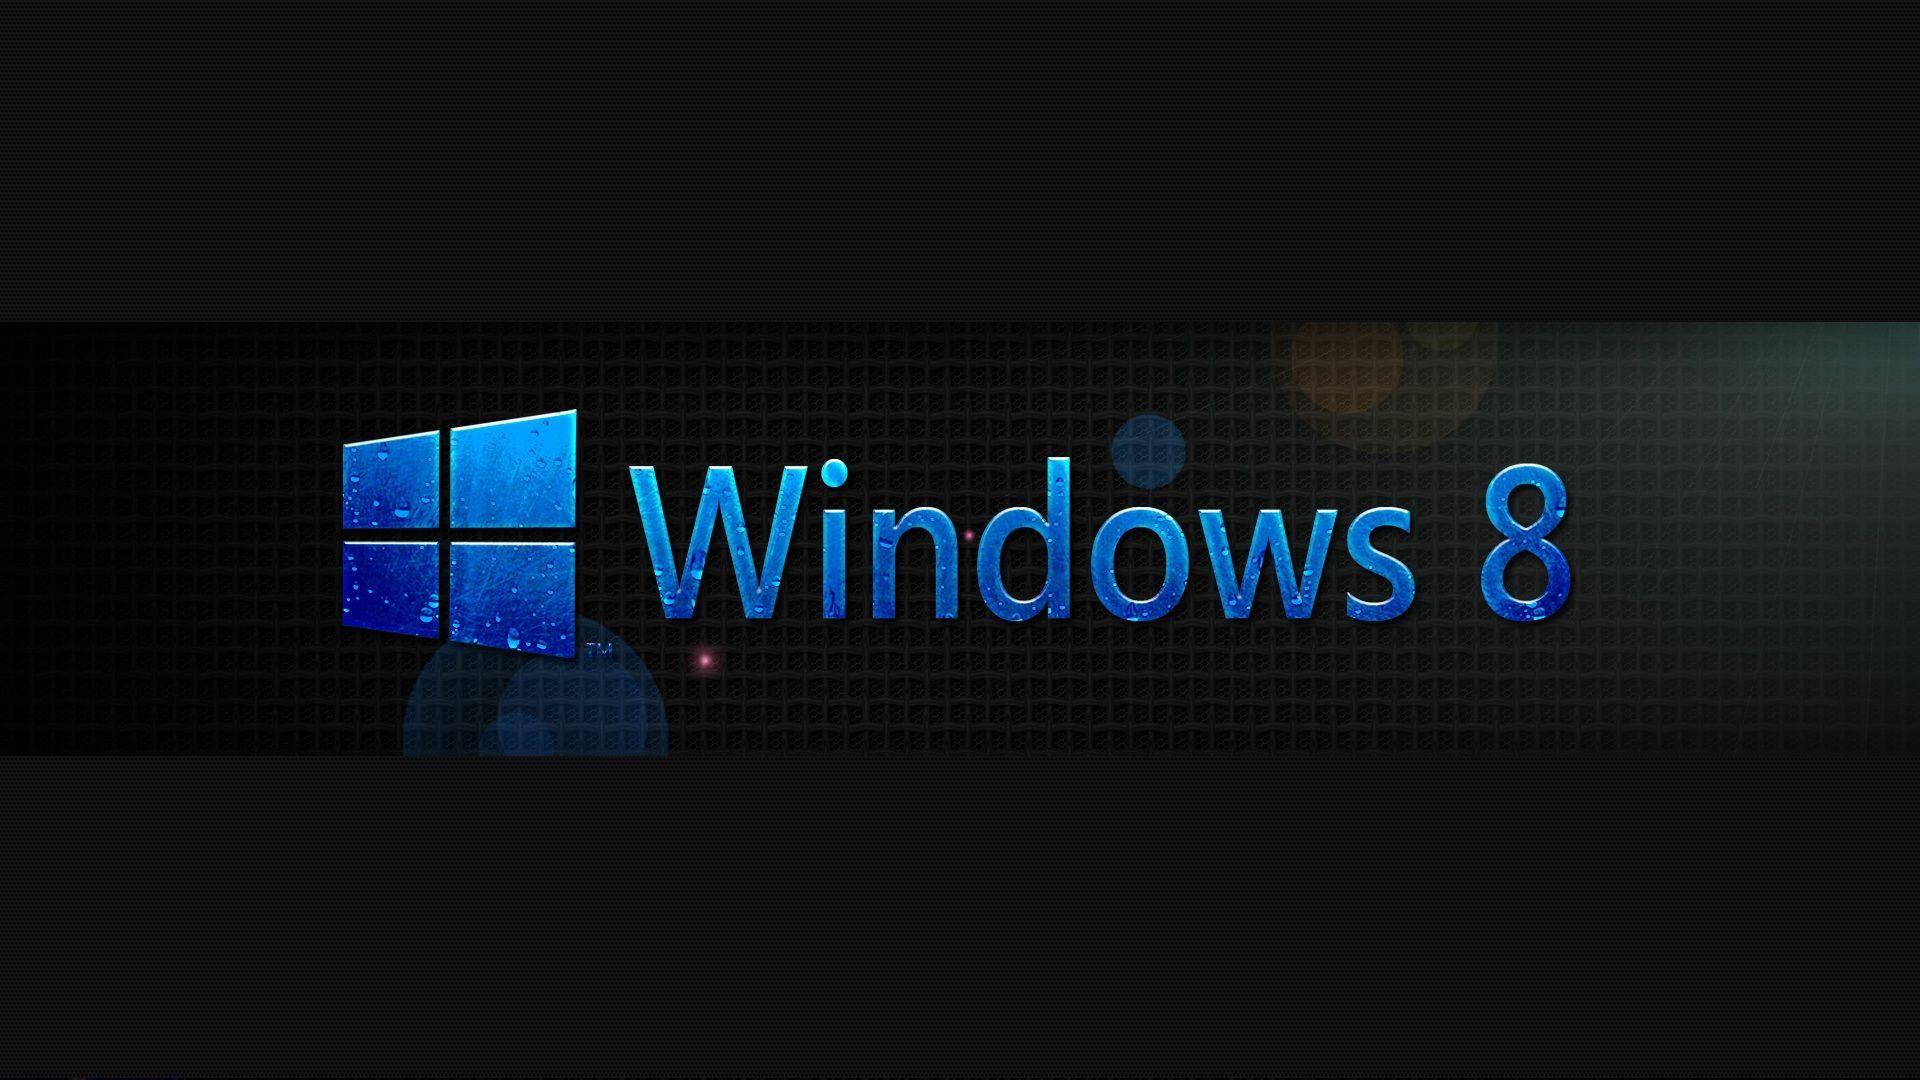 Windows 8 Wallpaper HD 1080p Free Download Gallery 83 Plus